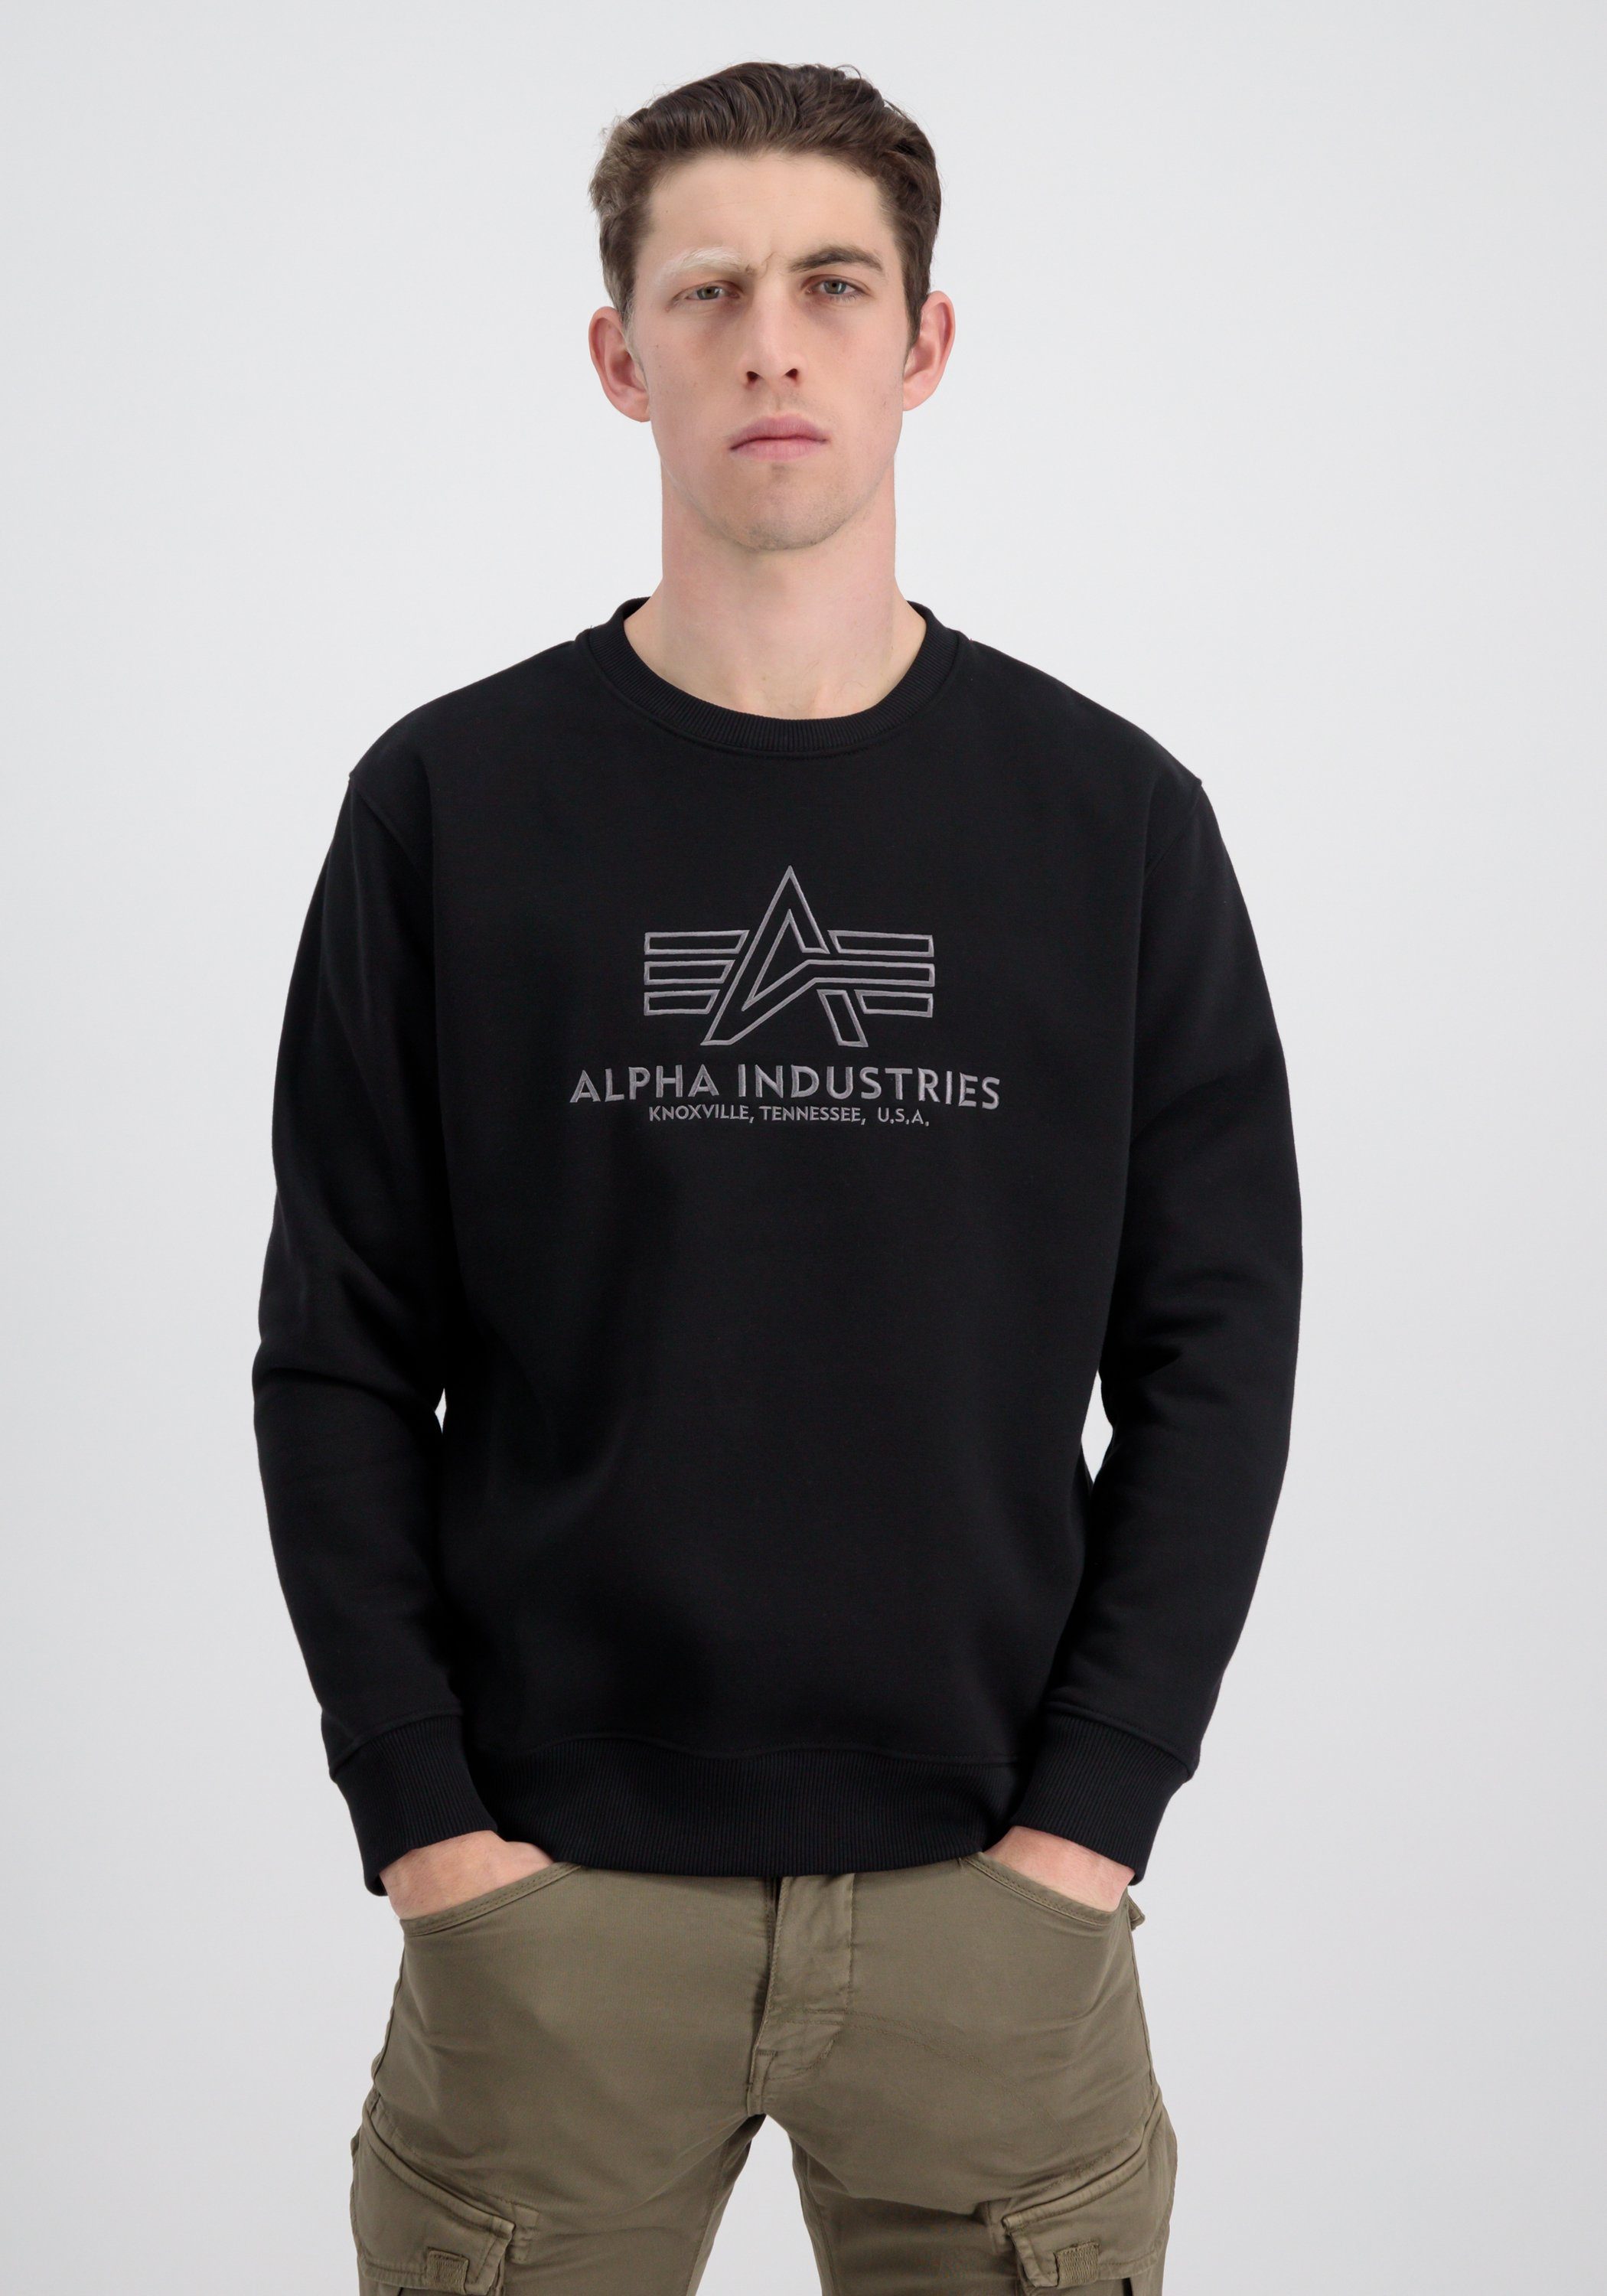 Alpha Industries Sweater gun Sweater metal / Sweatshirts Basic black - Industries Embroidery Men Alpha